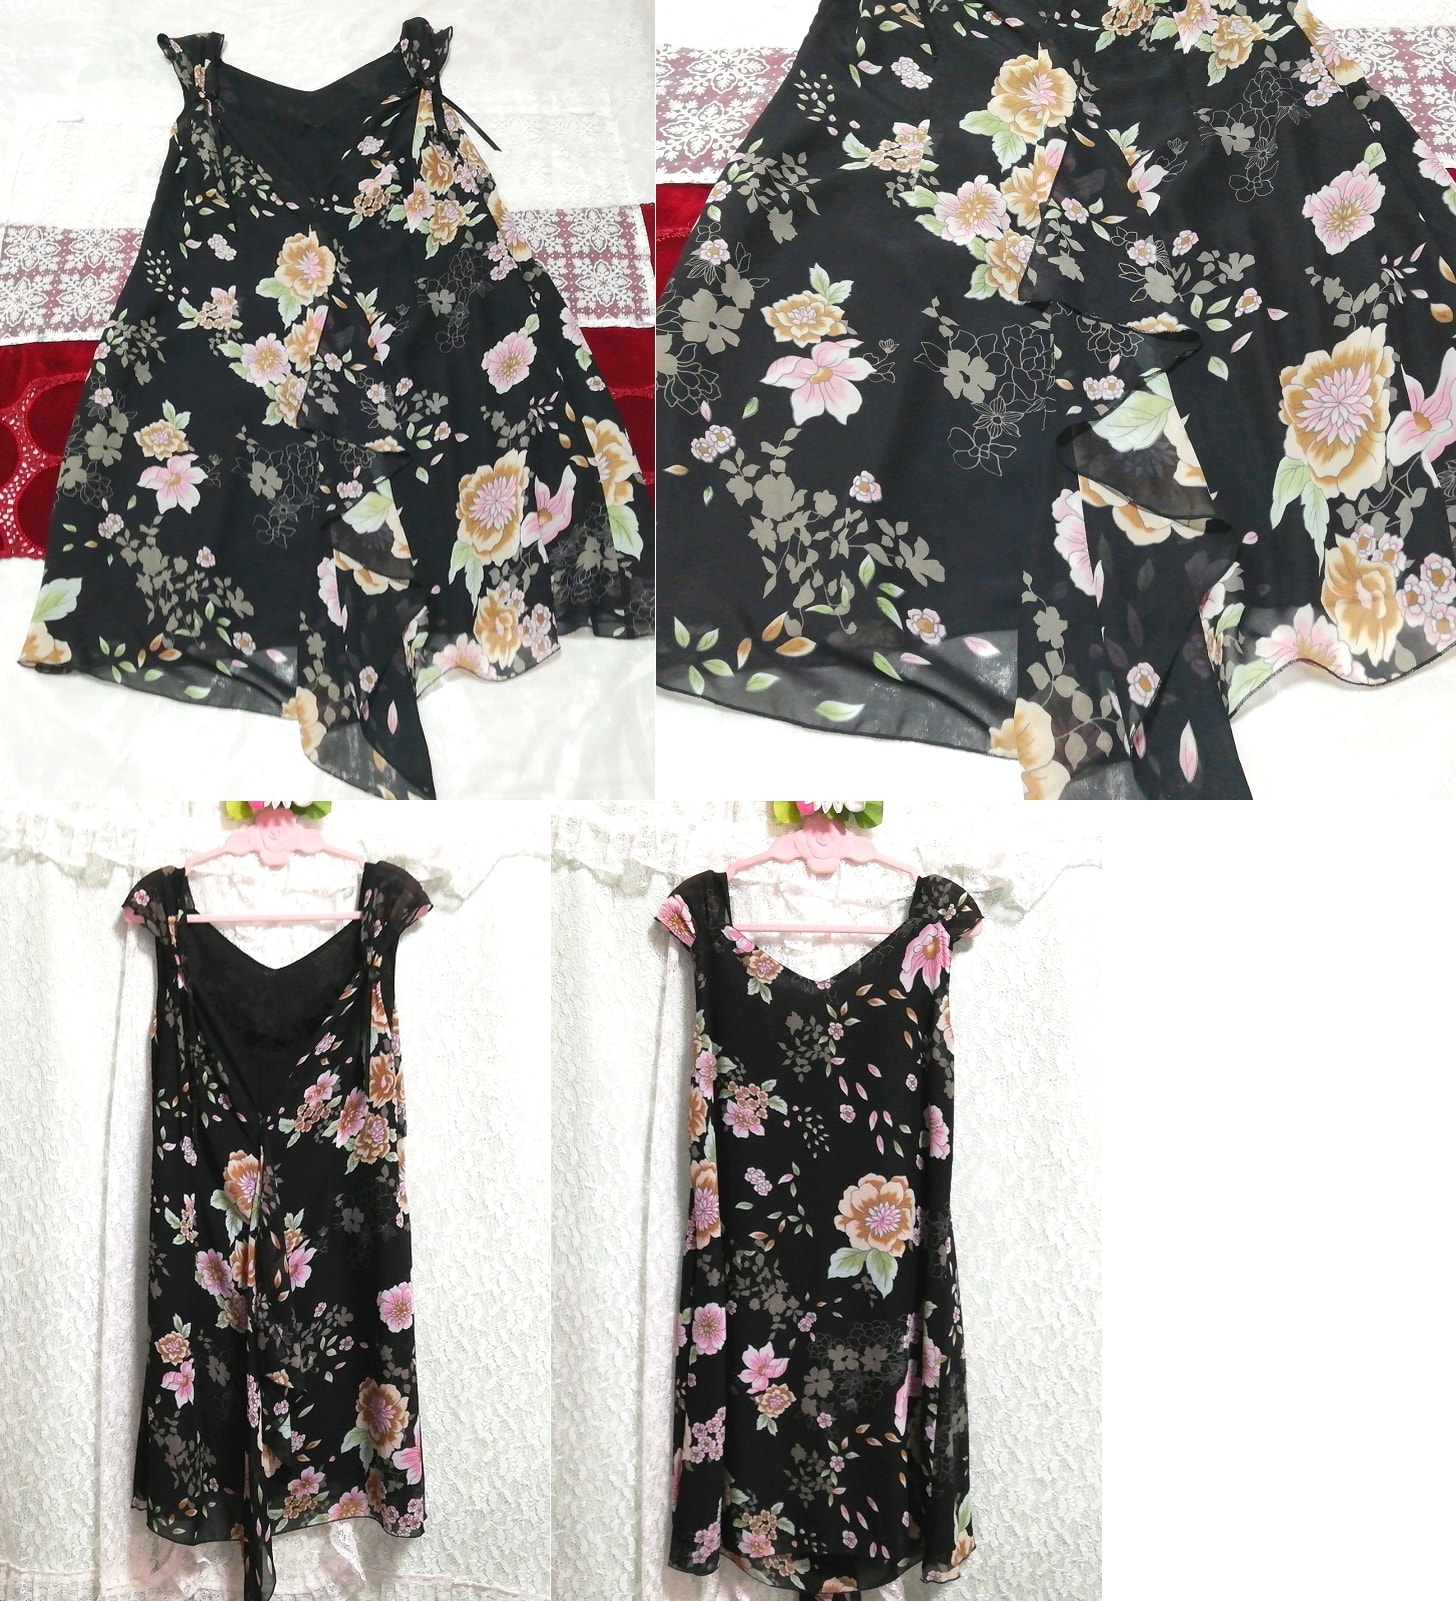 Black chiffon floral ribbon sleeveless negligee nightgown nightwear dress, knee length skirt, m size